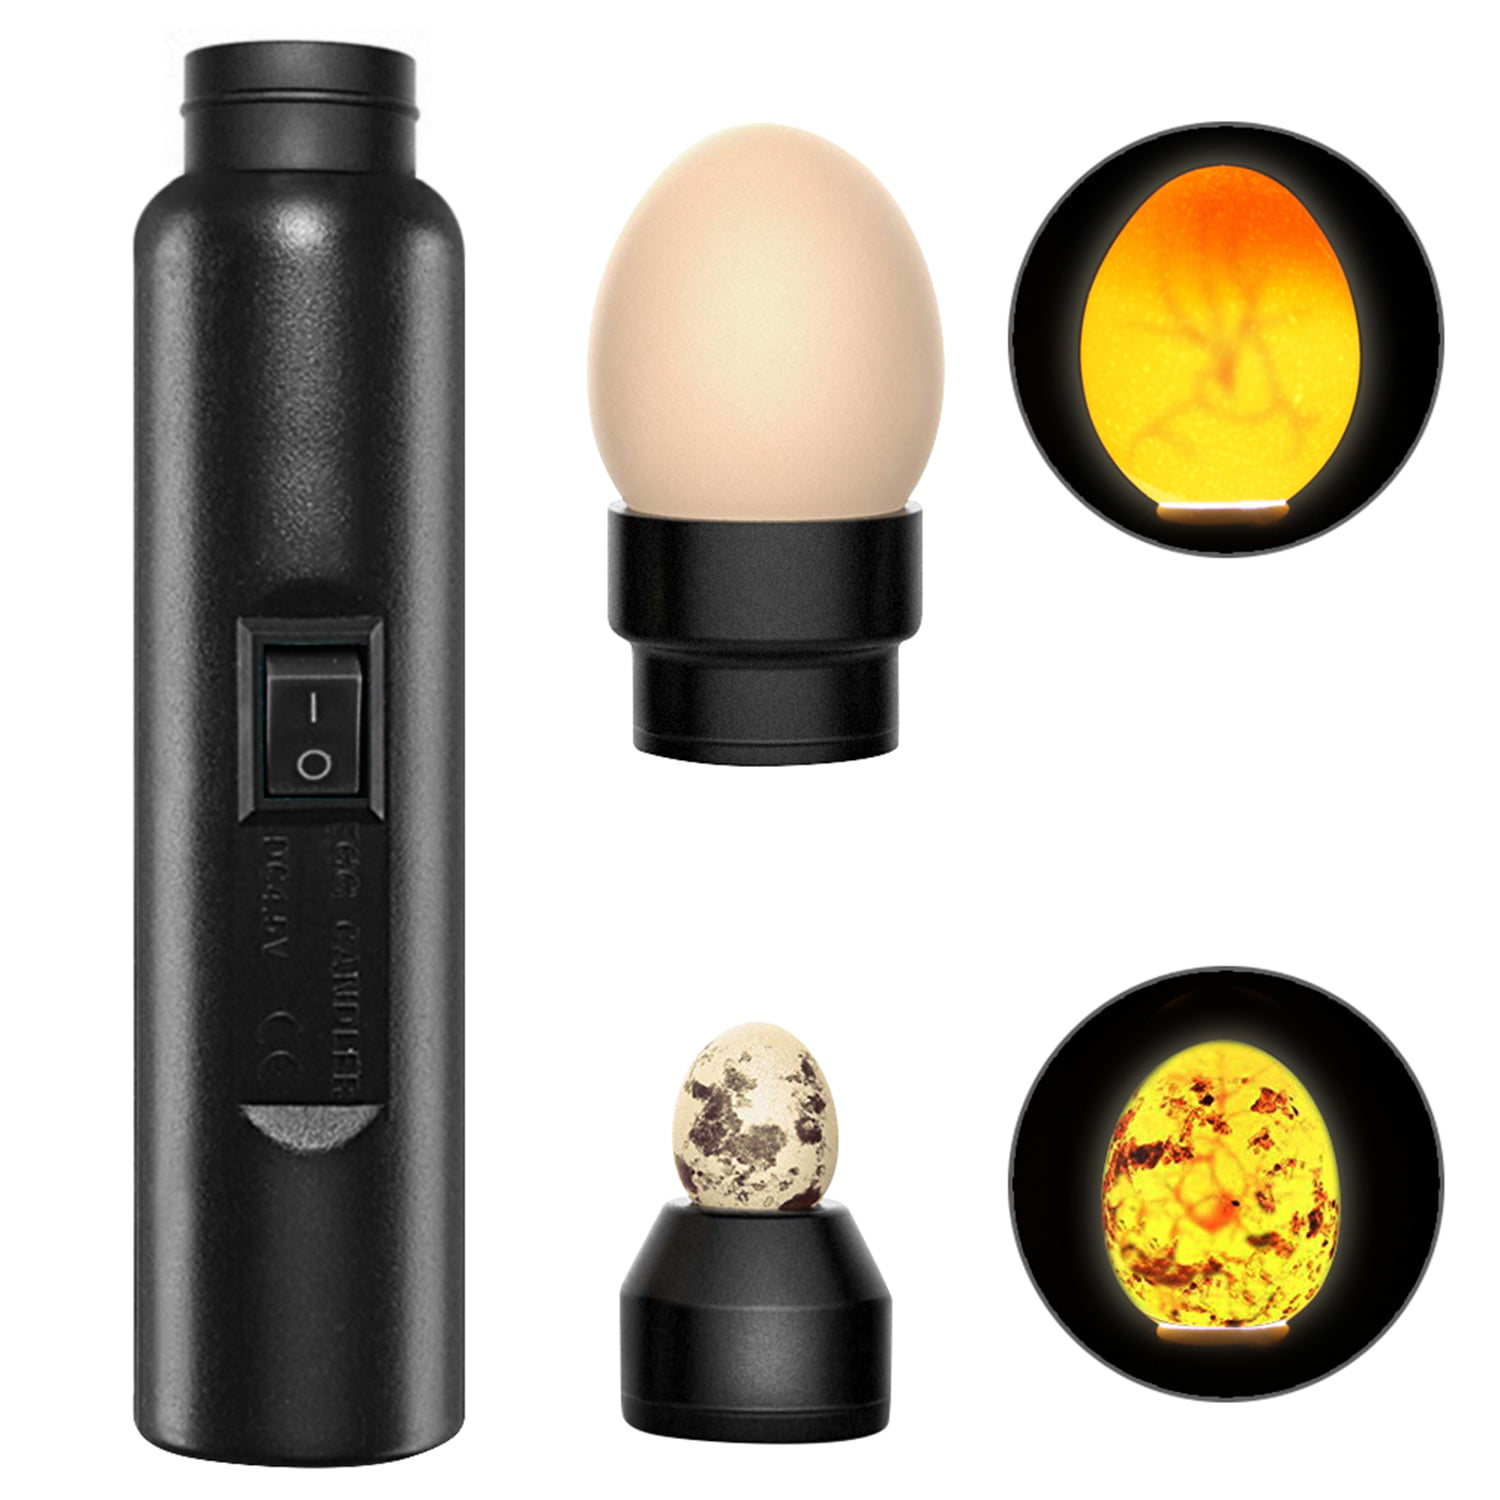 LED Cool Light Egg Candler Tester Incubator Chicken Poultry Camping Lamp 